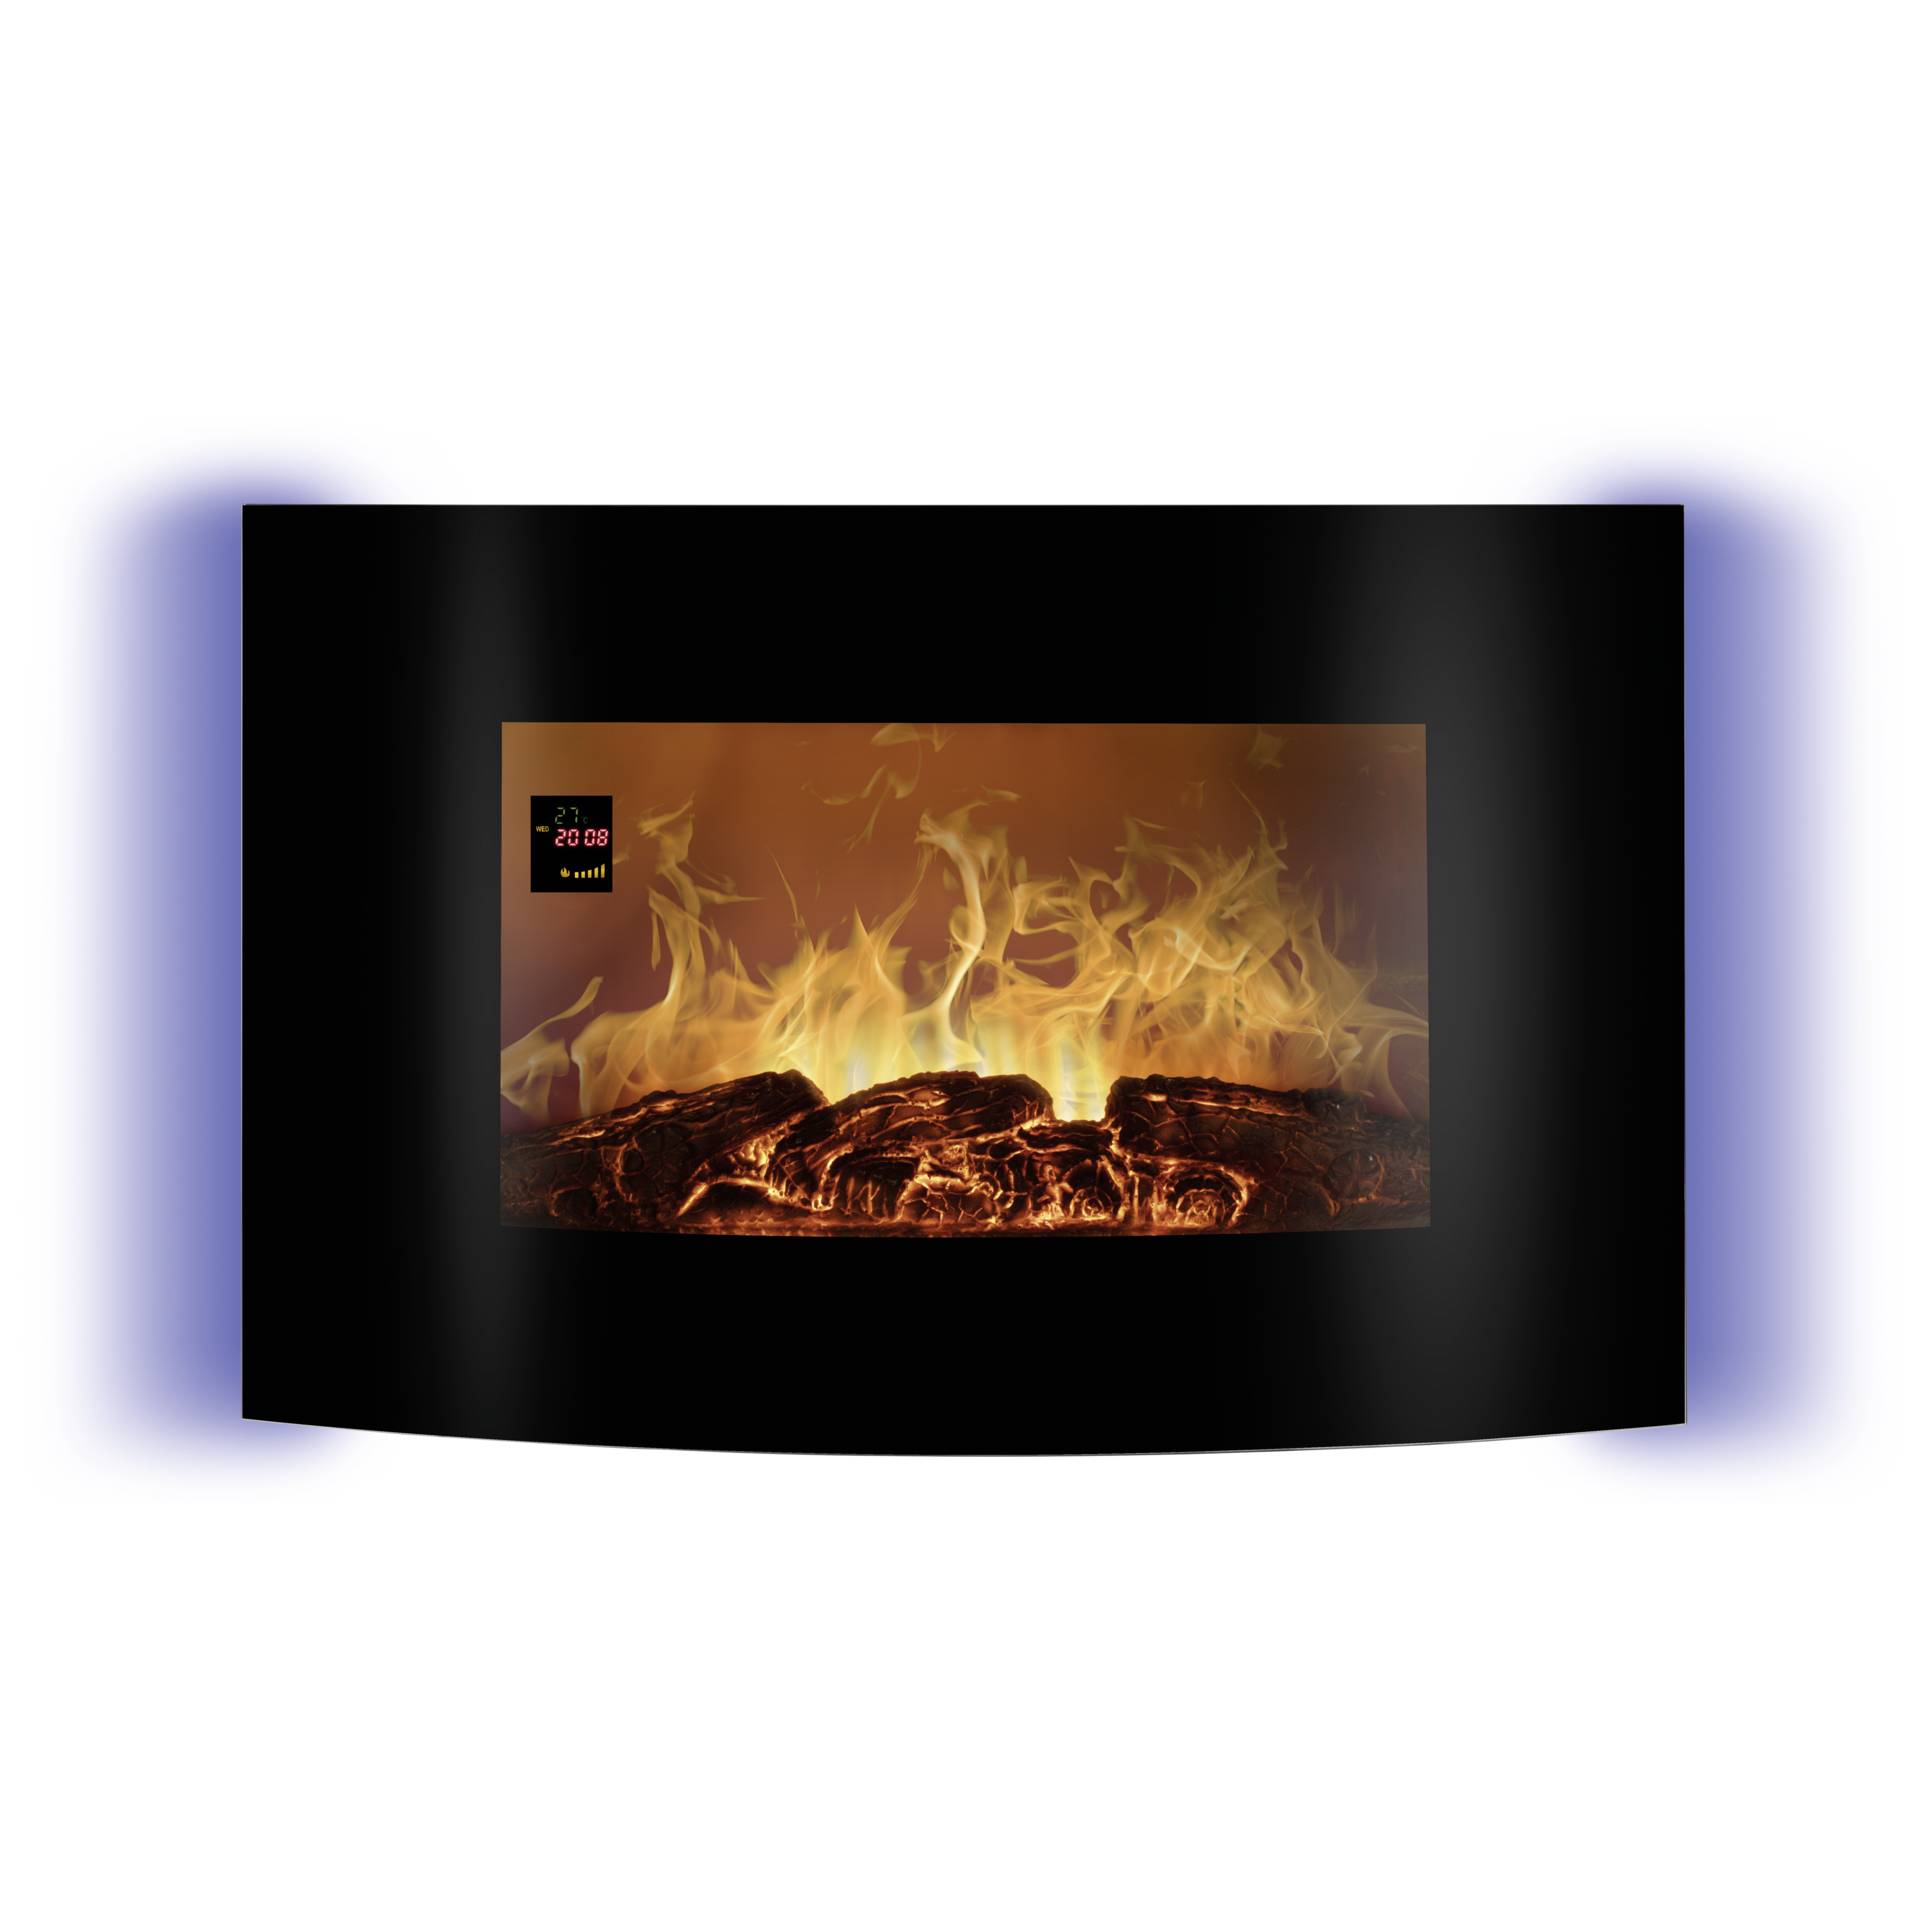 How to Start Electric Fireplace Inspirational Bomann Ek 6021 Cb Black Electric Fireplace Heater